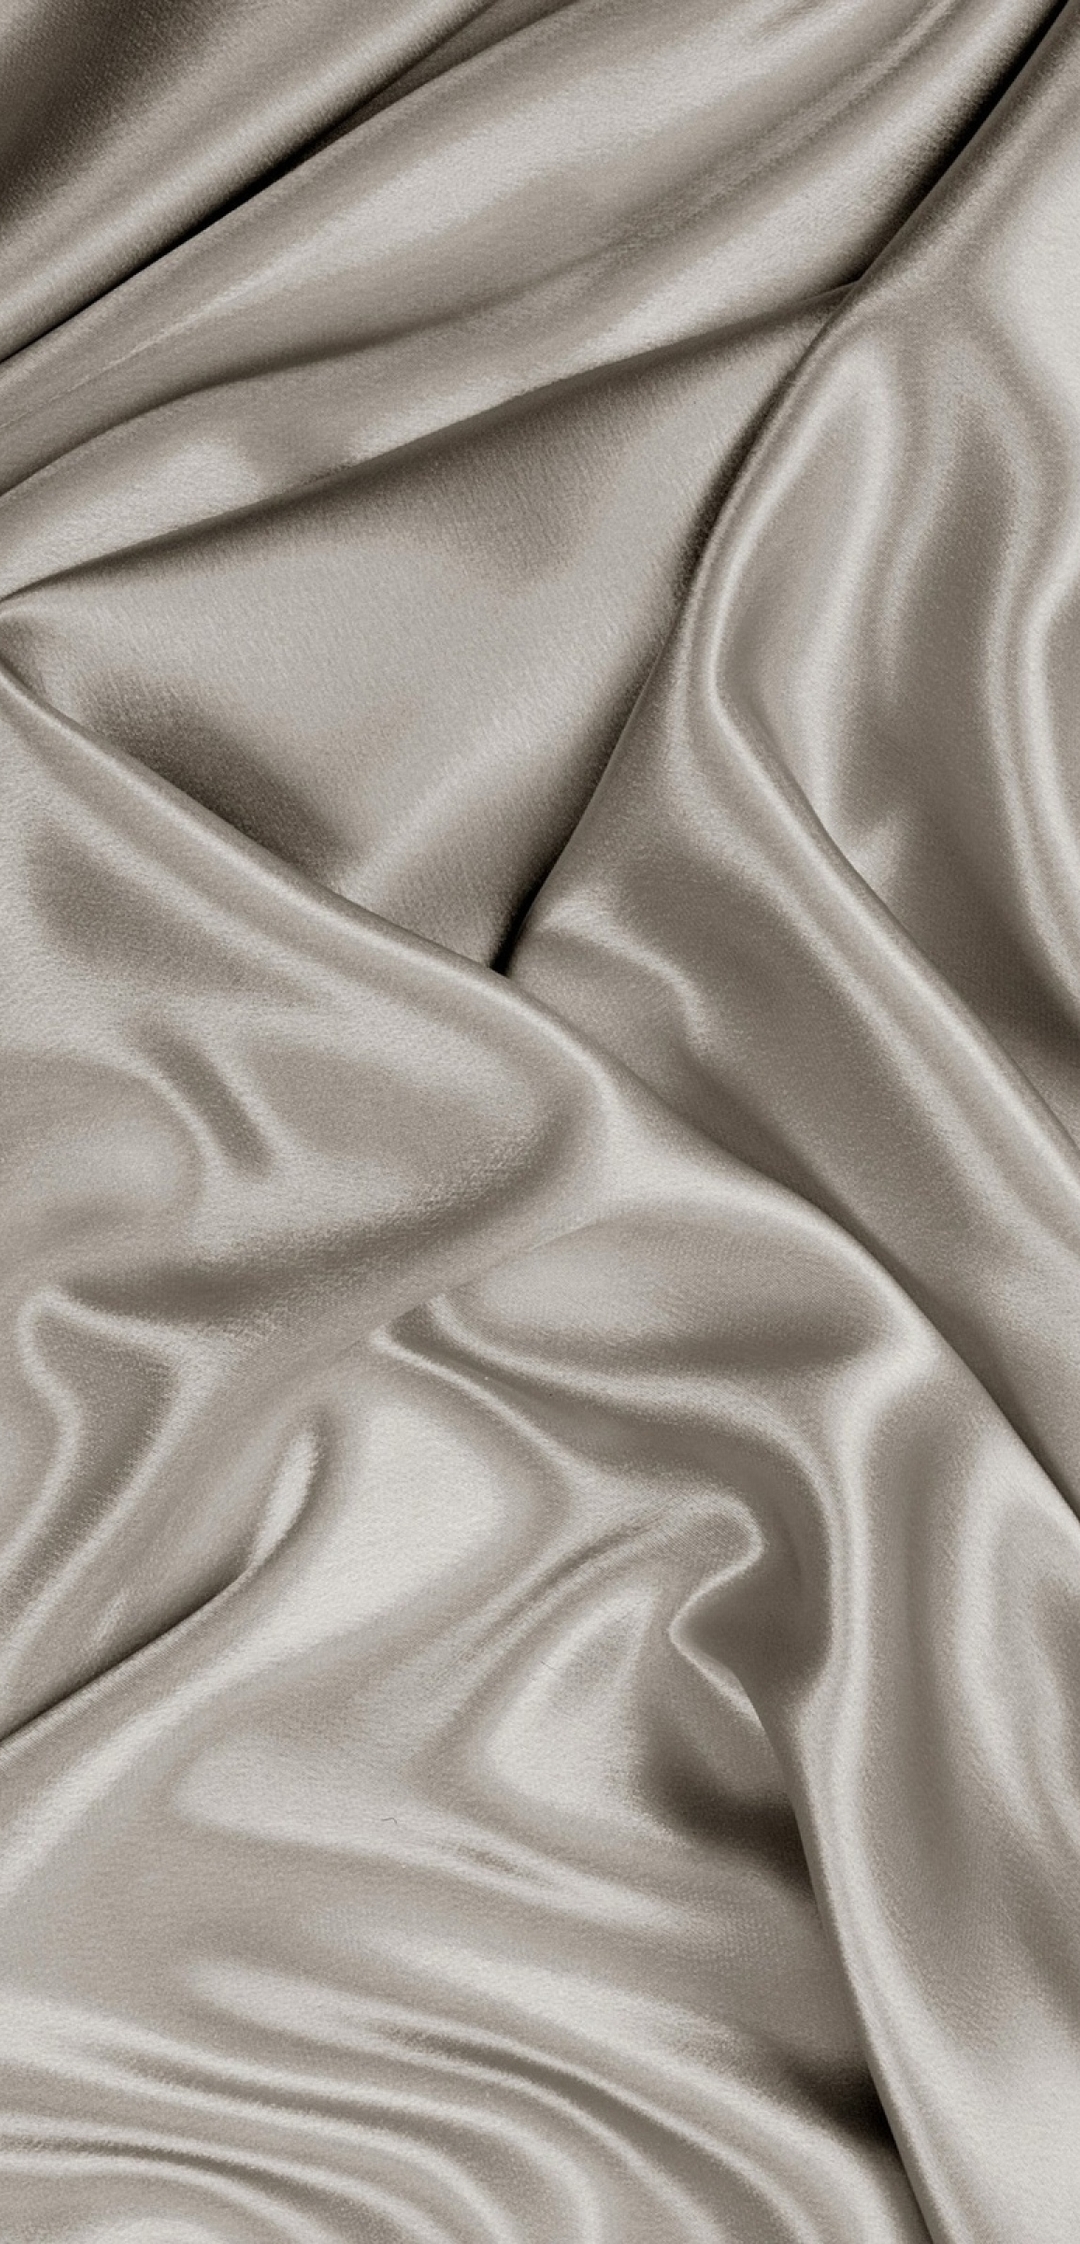 Картинка: Серый шёлк, мятость, ткань